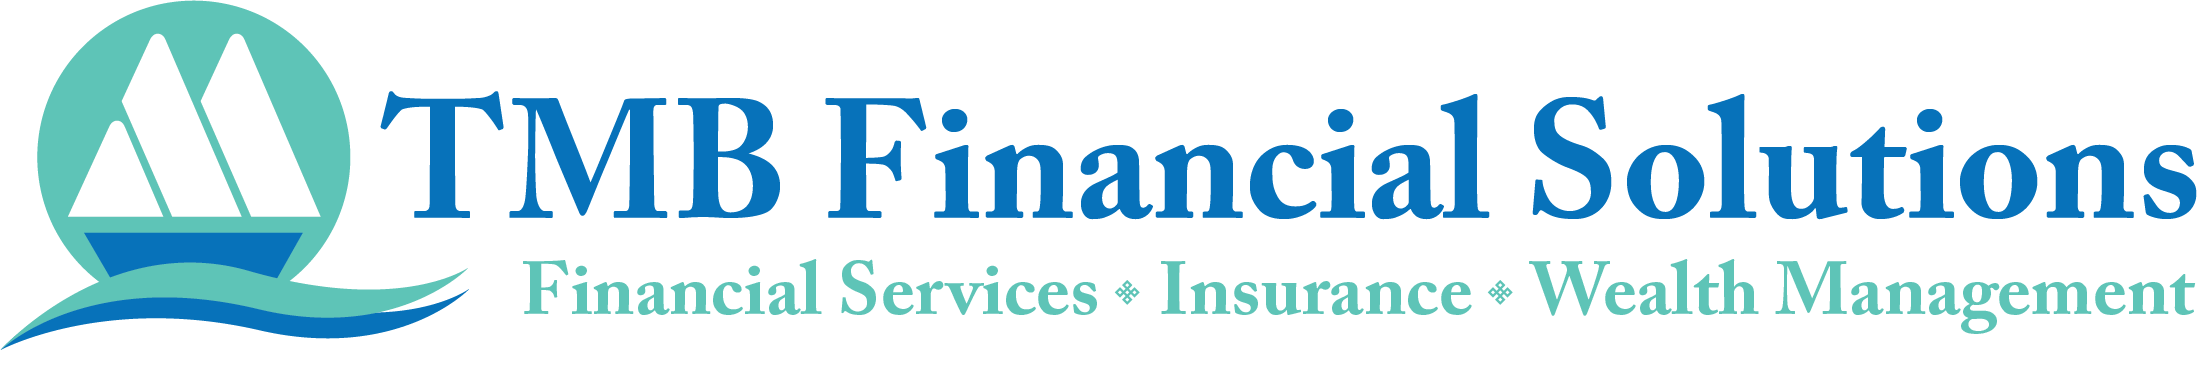 TMB Financial Solutions logo